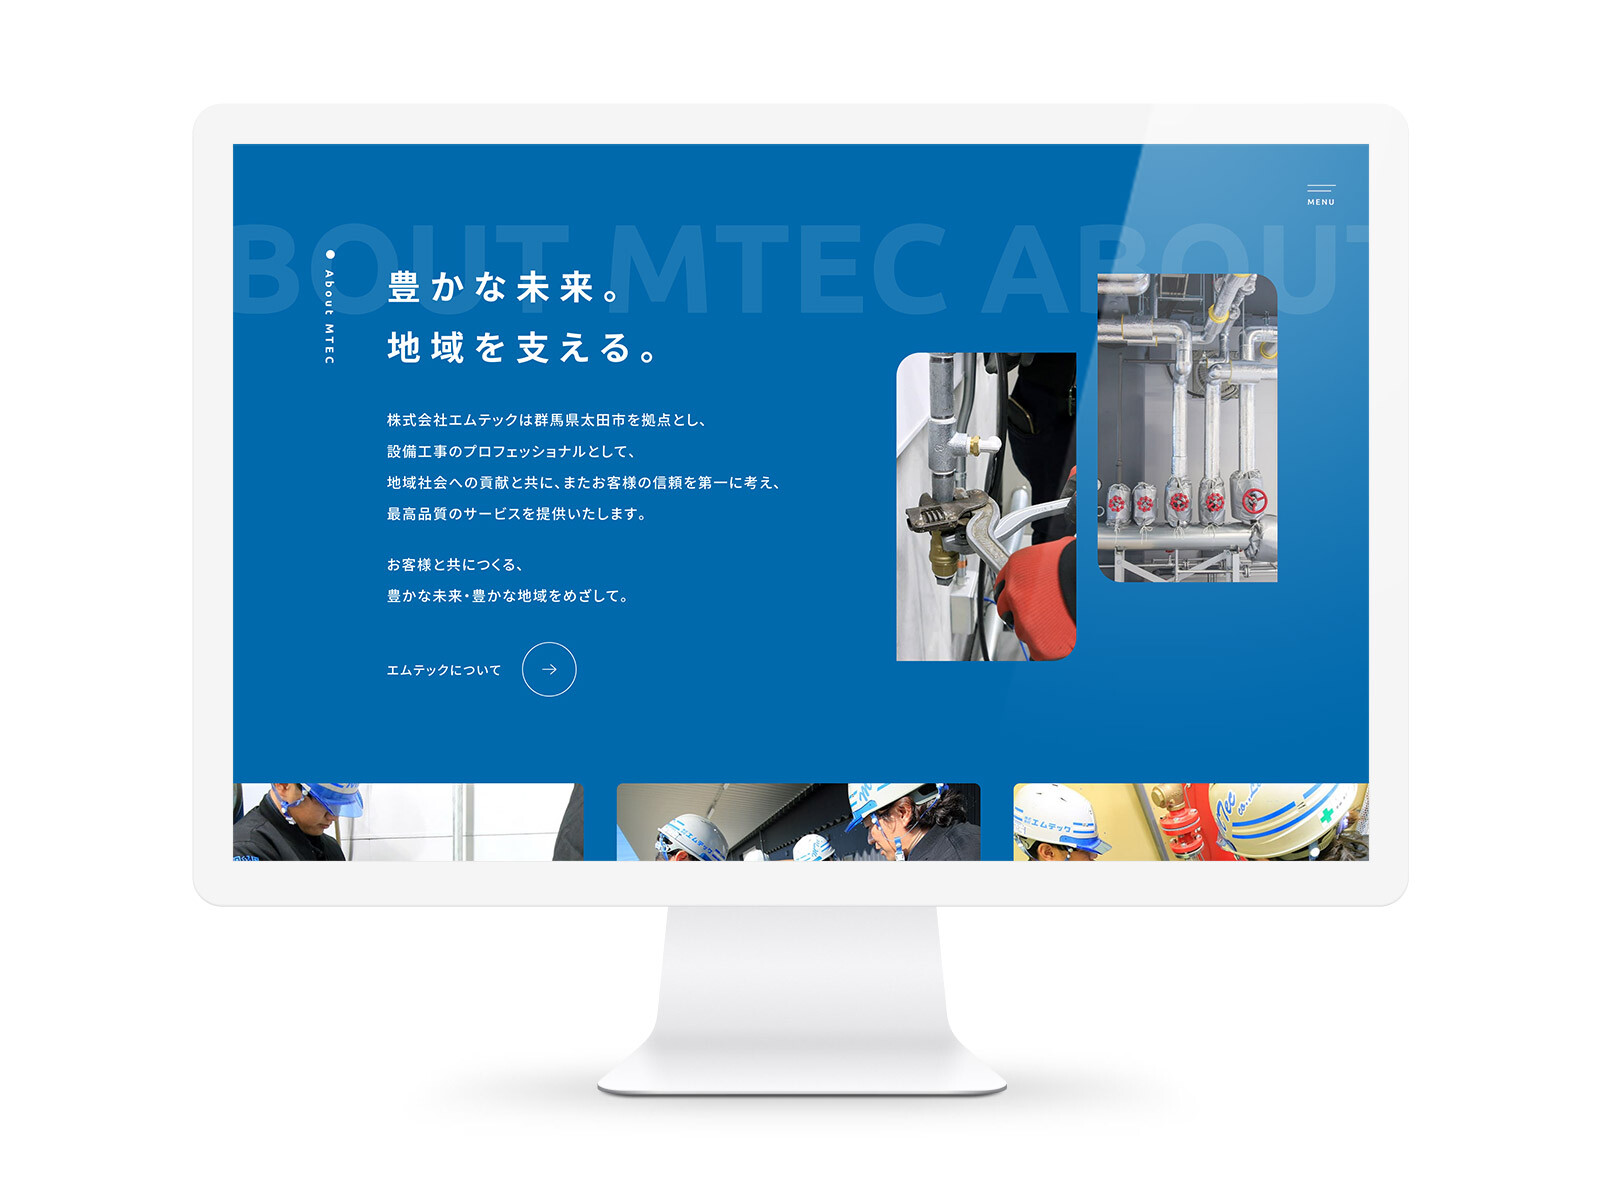 MTEC CO., LTD. image